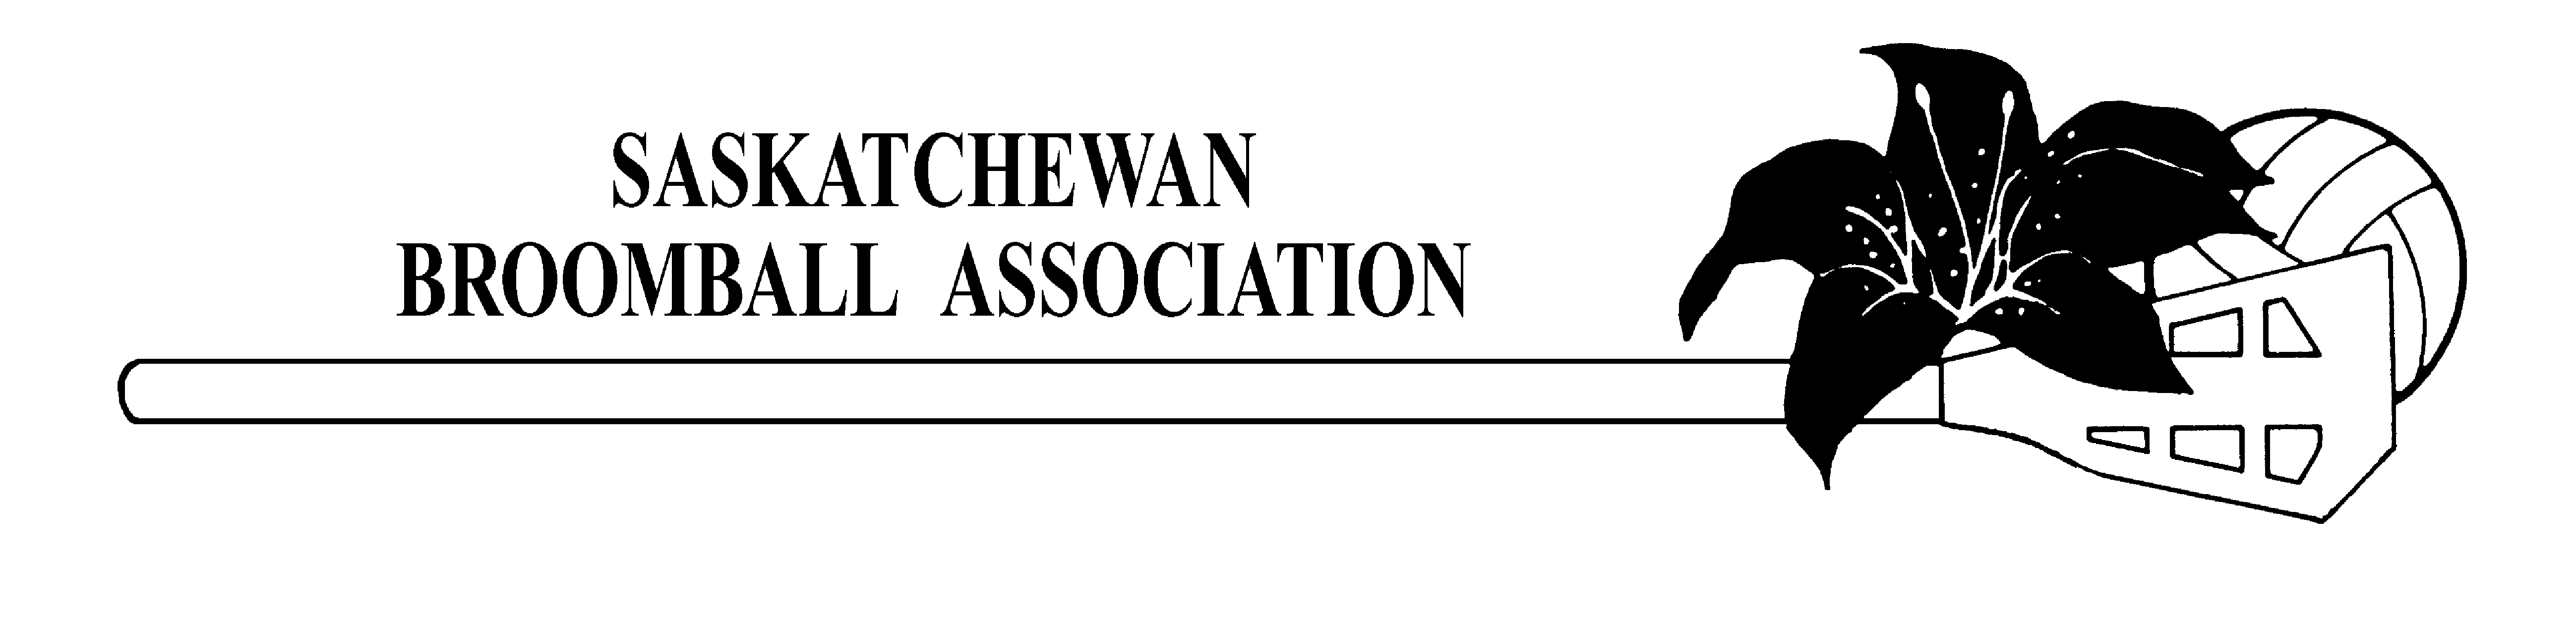 Saskatchewan Broomball Association Logo